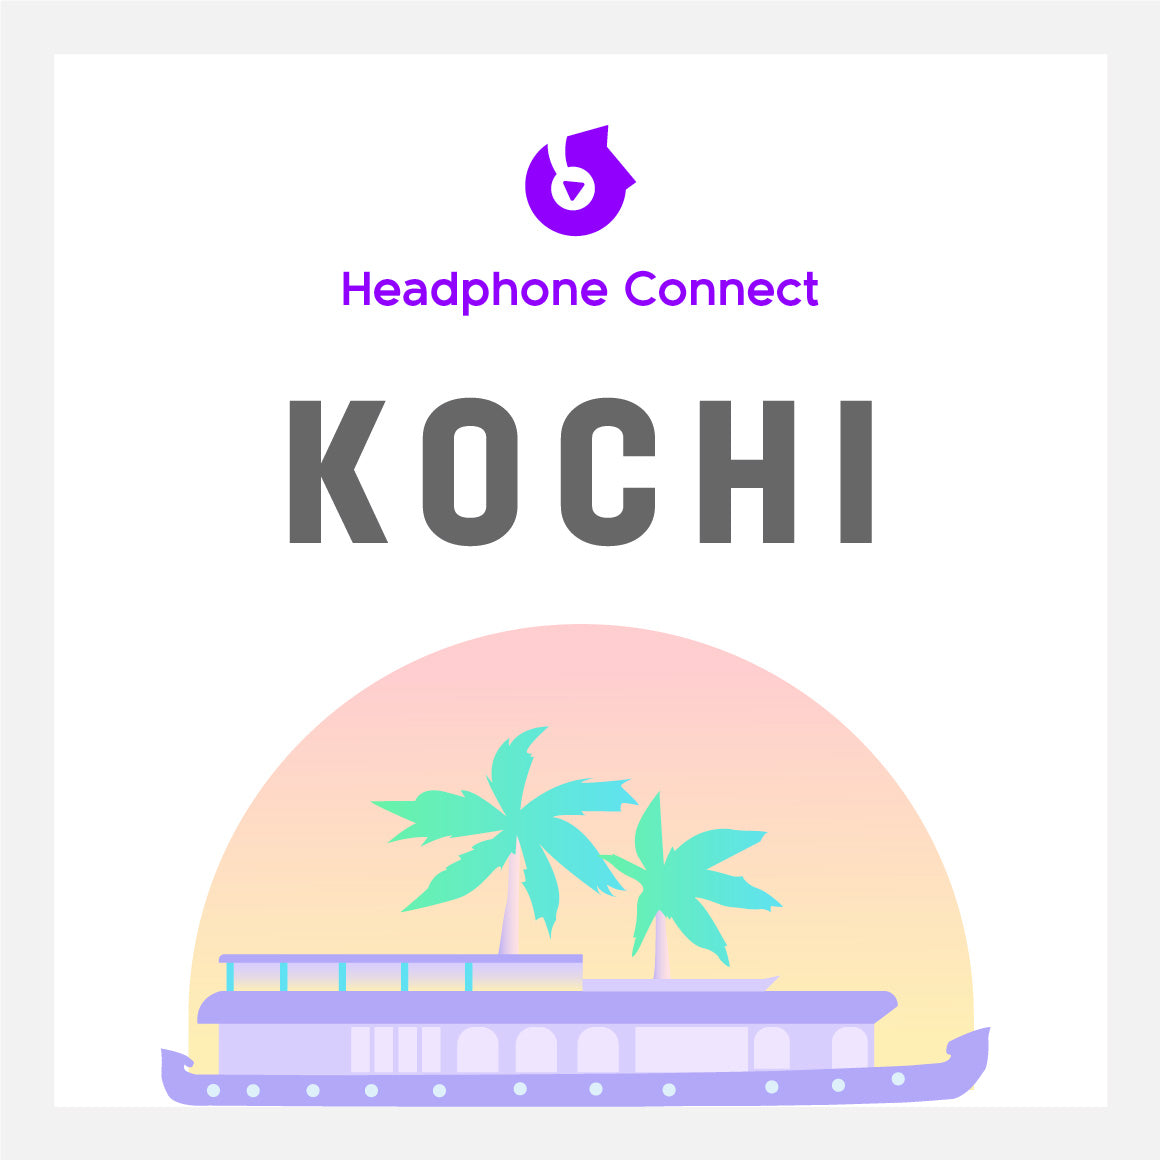 Headphone Connect Kochi